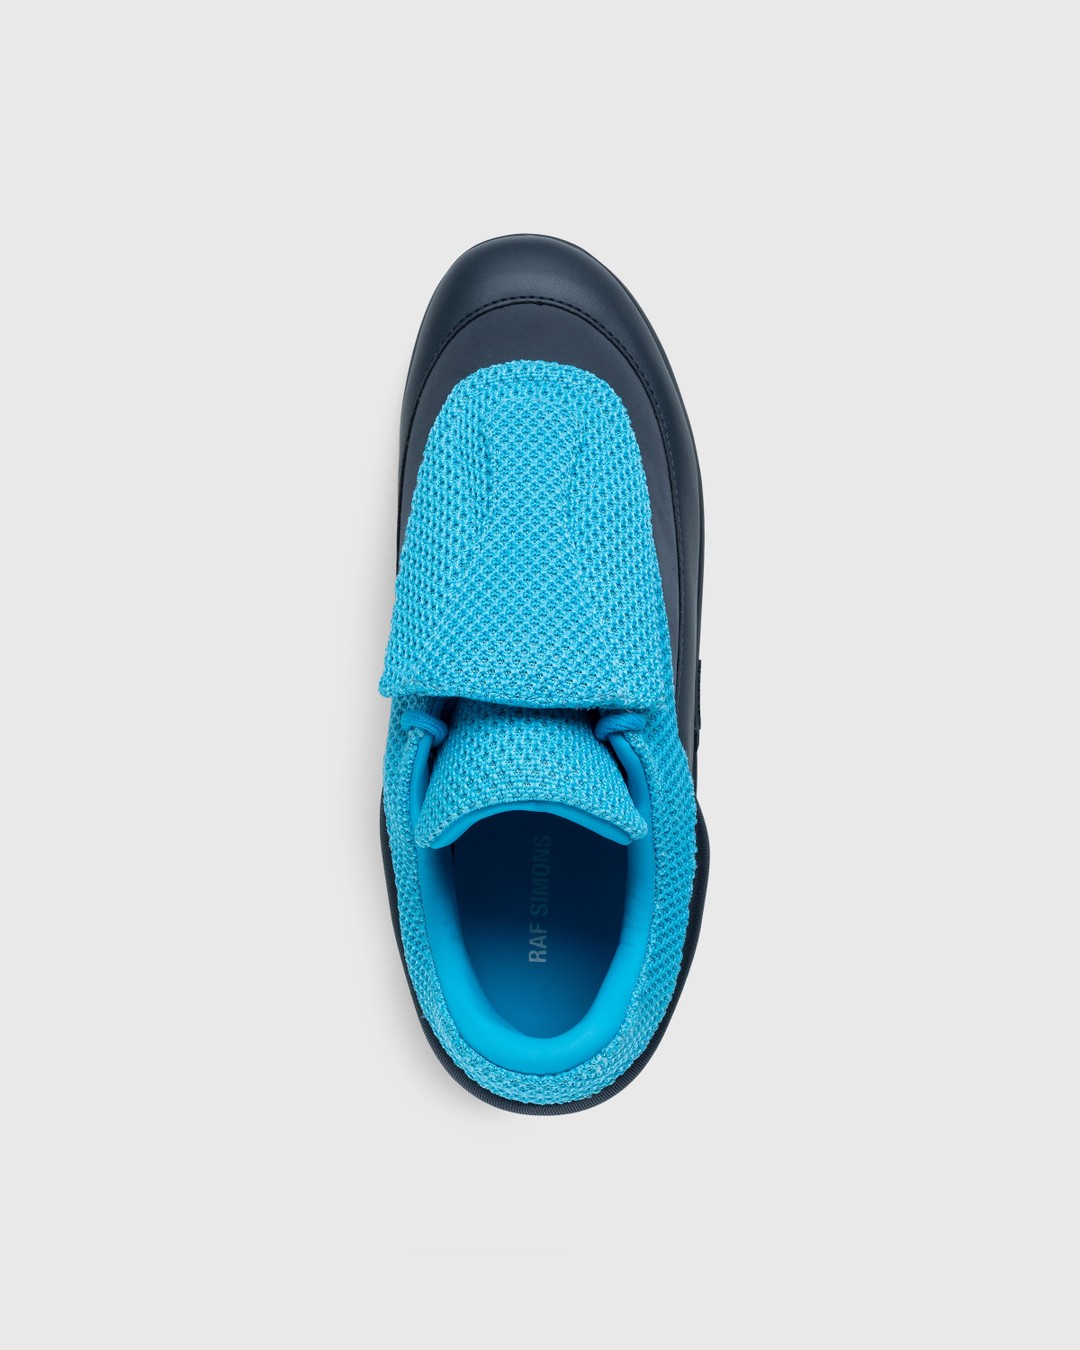 Raf Simons – Antei Aqua - Sneakers - Blue - Image 5